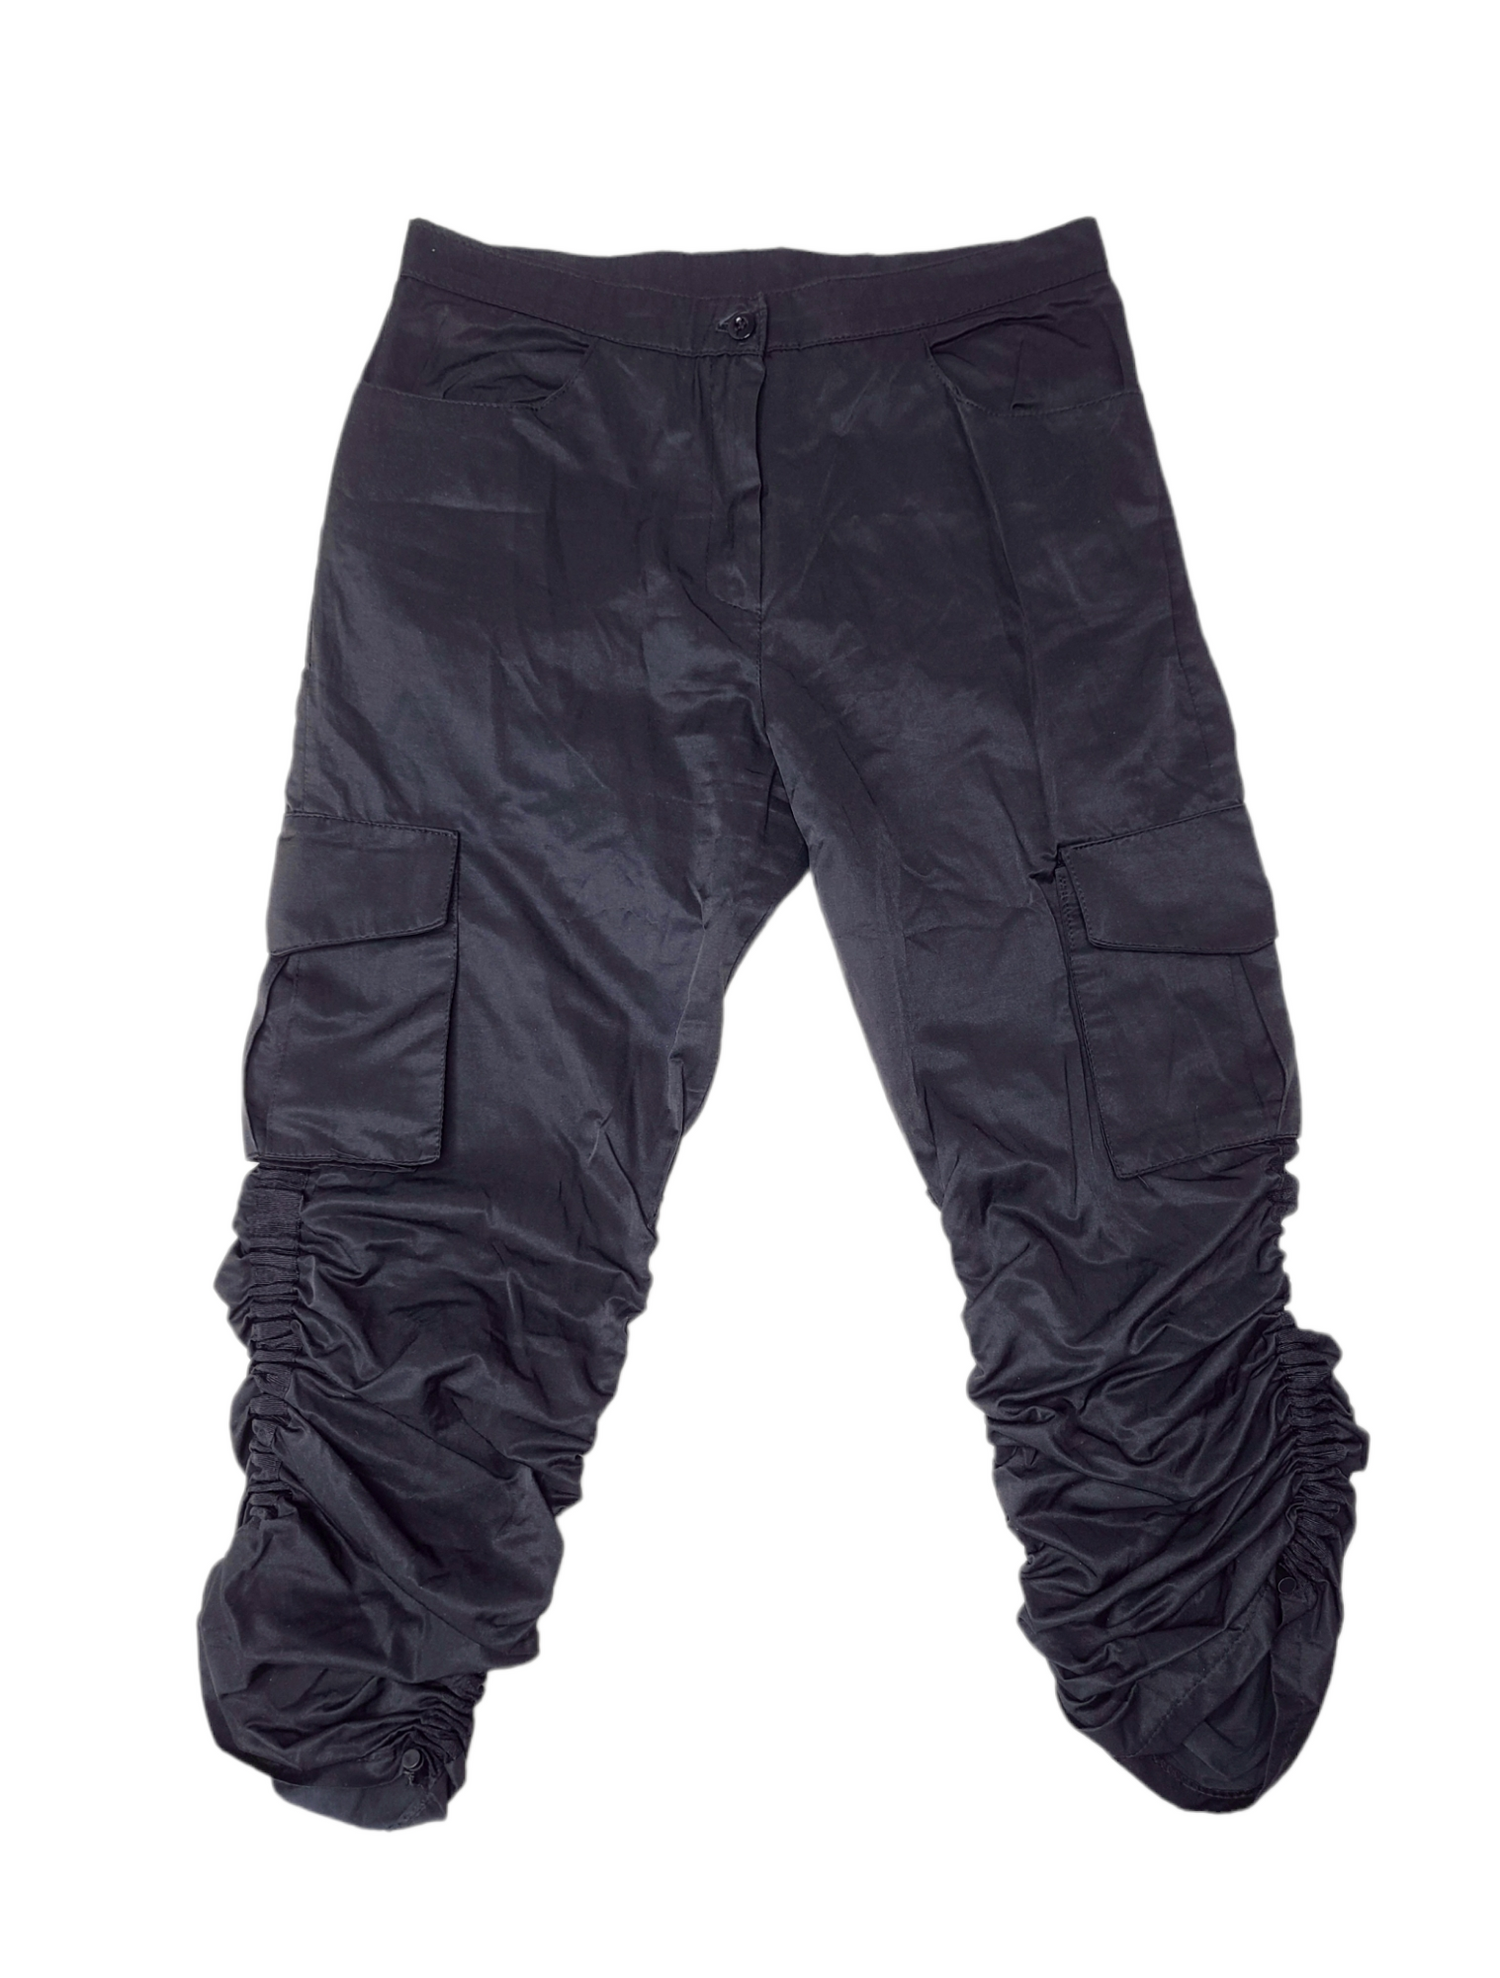 Y2k cybery2k futuristic harajuku techwear gorpcore rave noir pantalon 2000s 